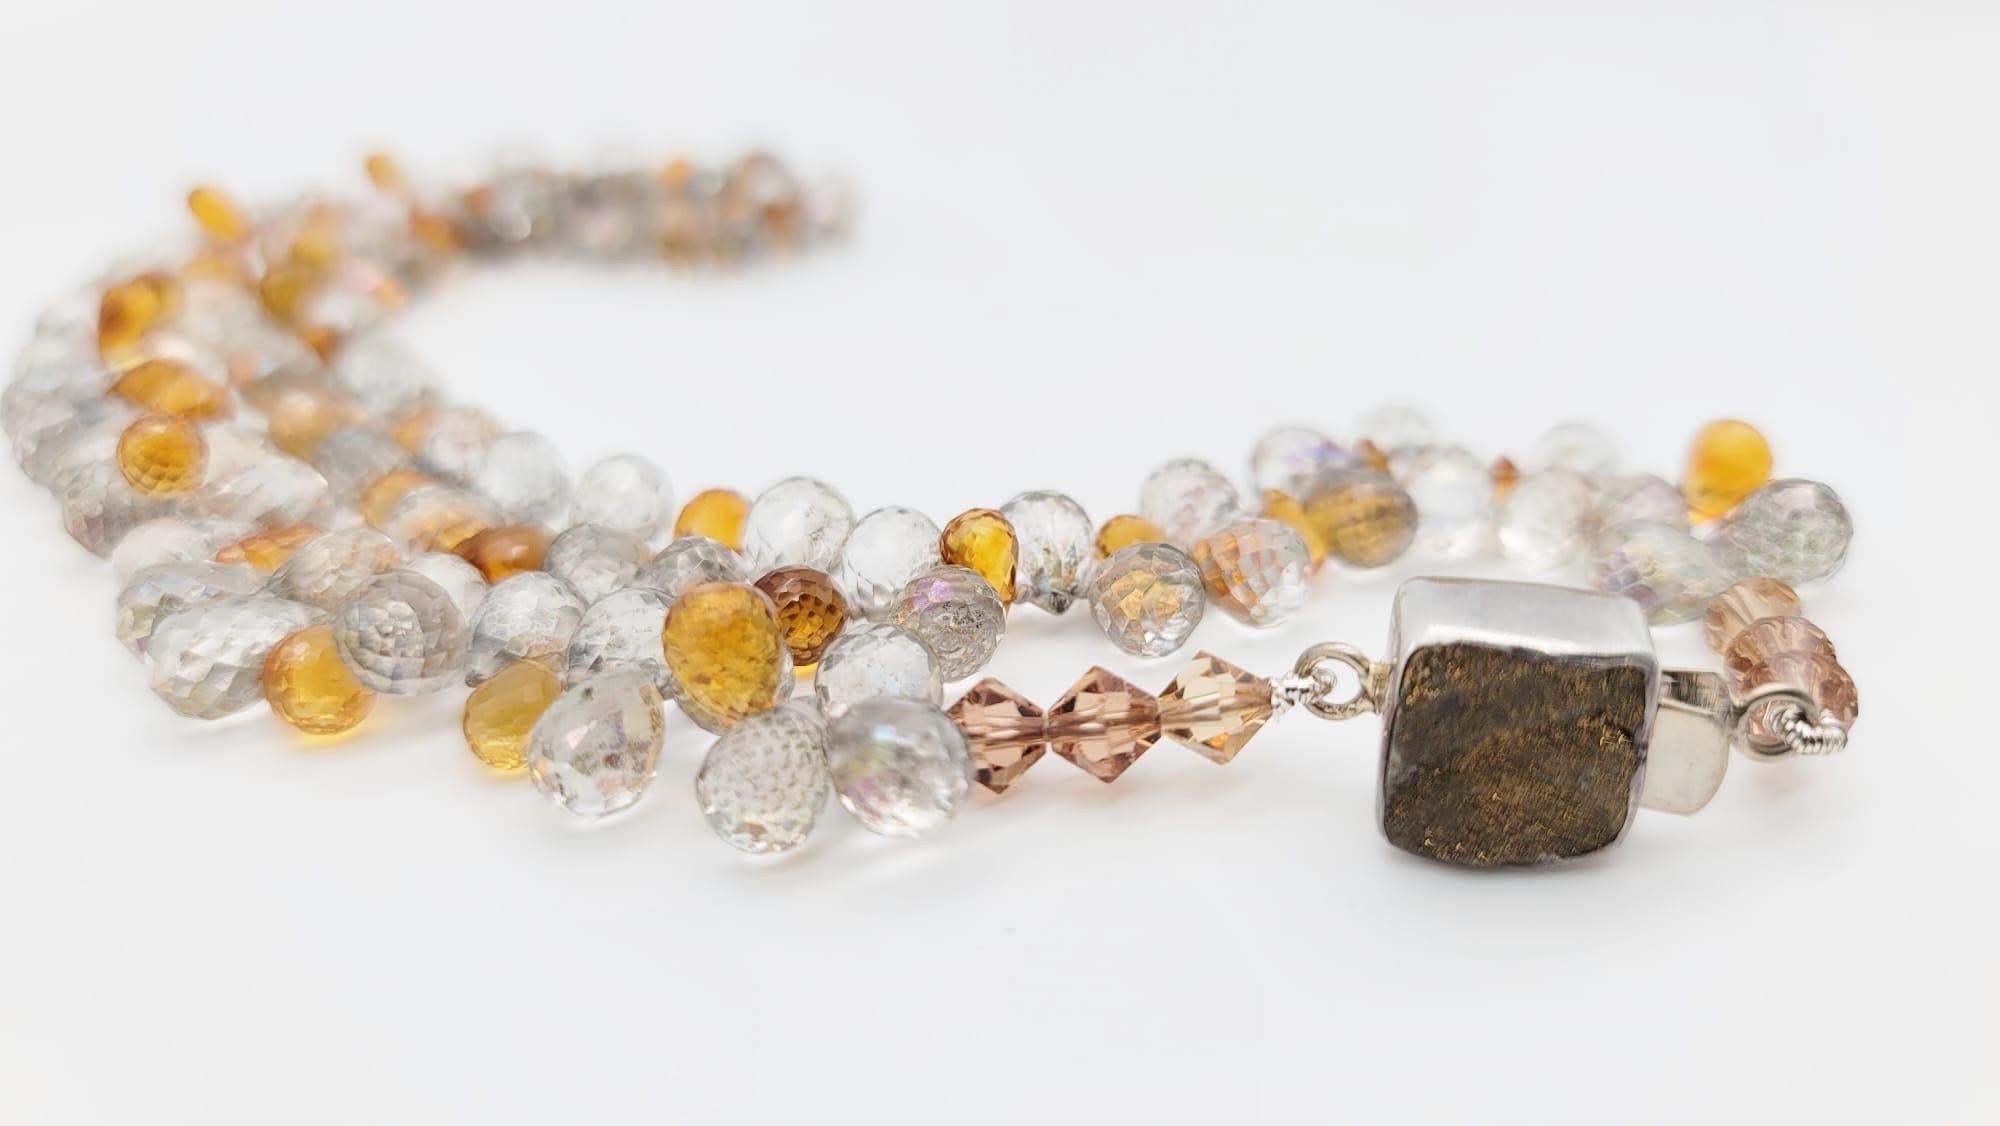 A.Jeschel  Stunning Topaz and Crystal Quartz teardrop necklace For Sale 2